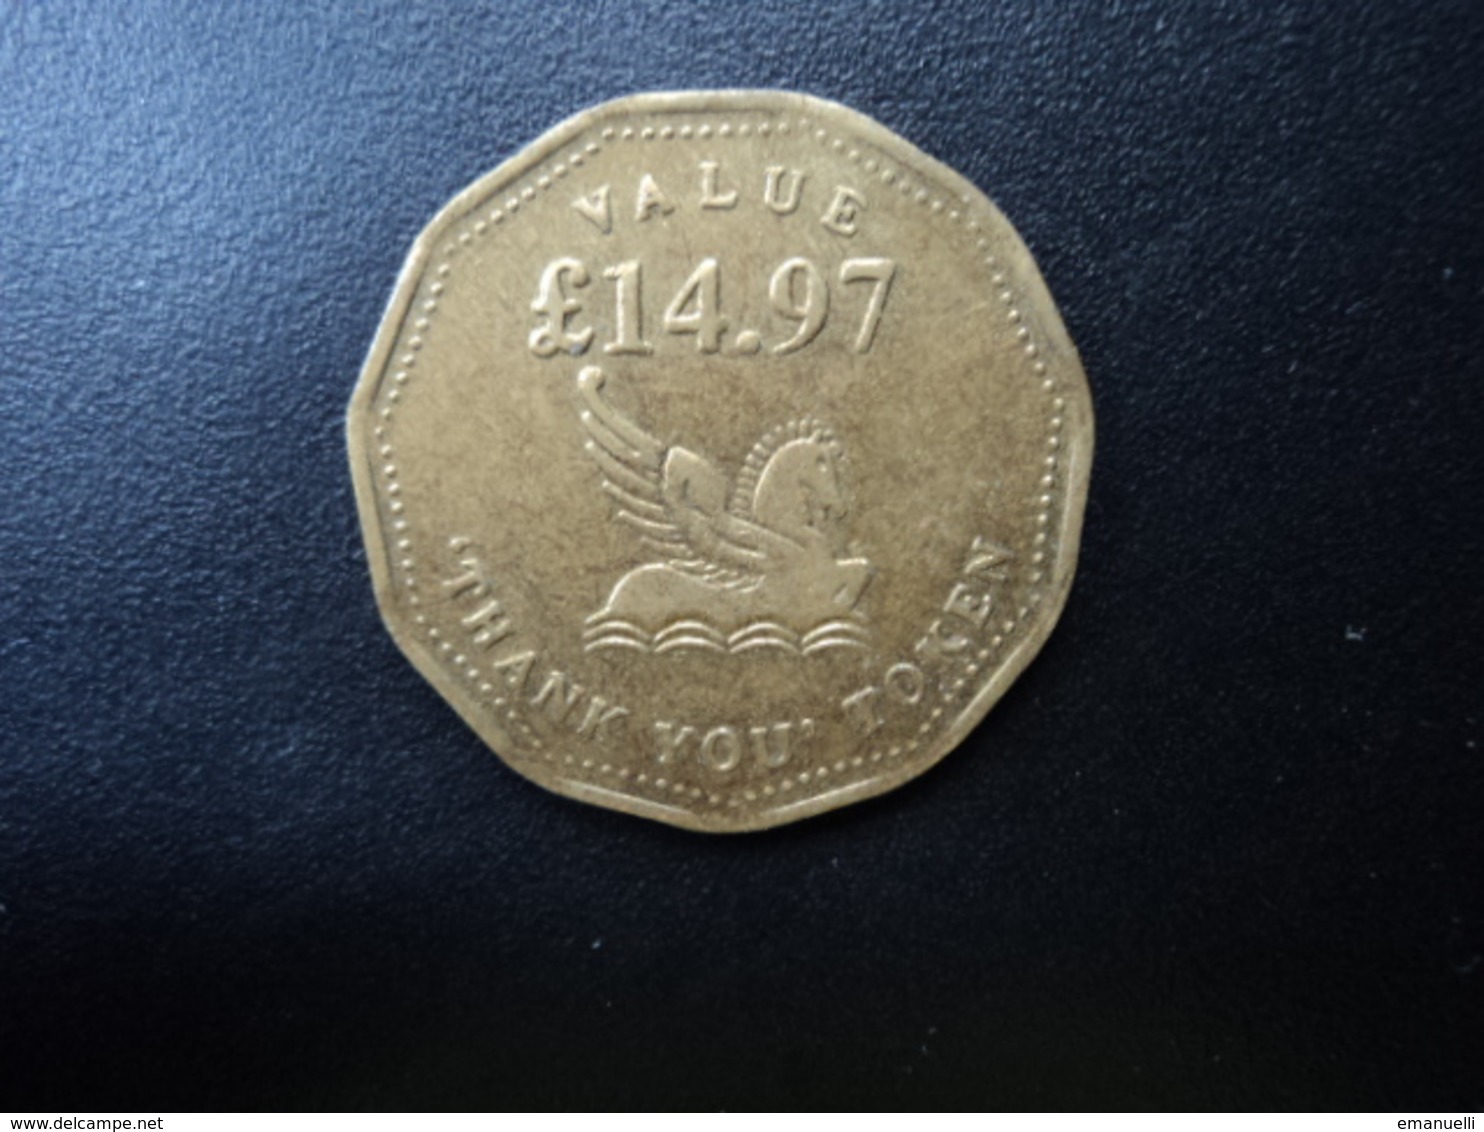 VALUE £ 14.97 THANK YOU TOKEN  * - Monetary/Of Necessity